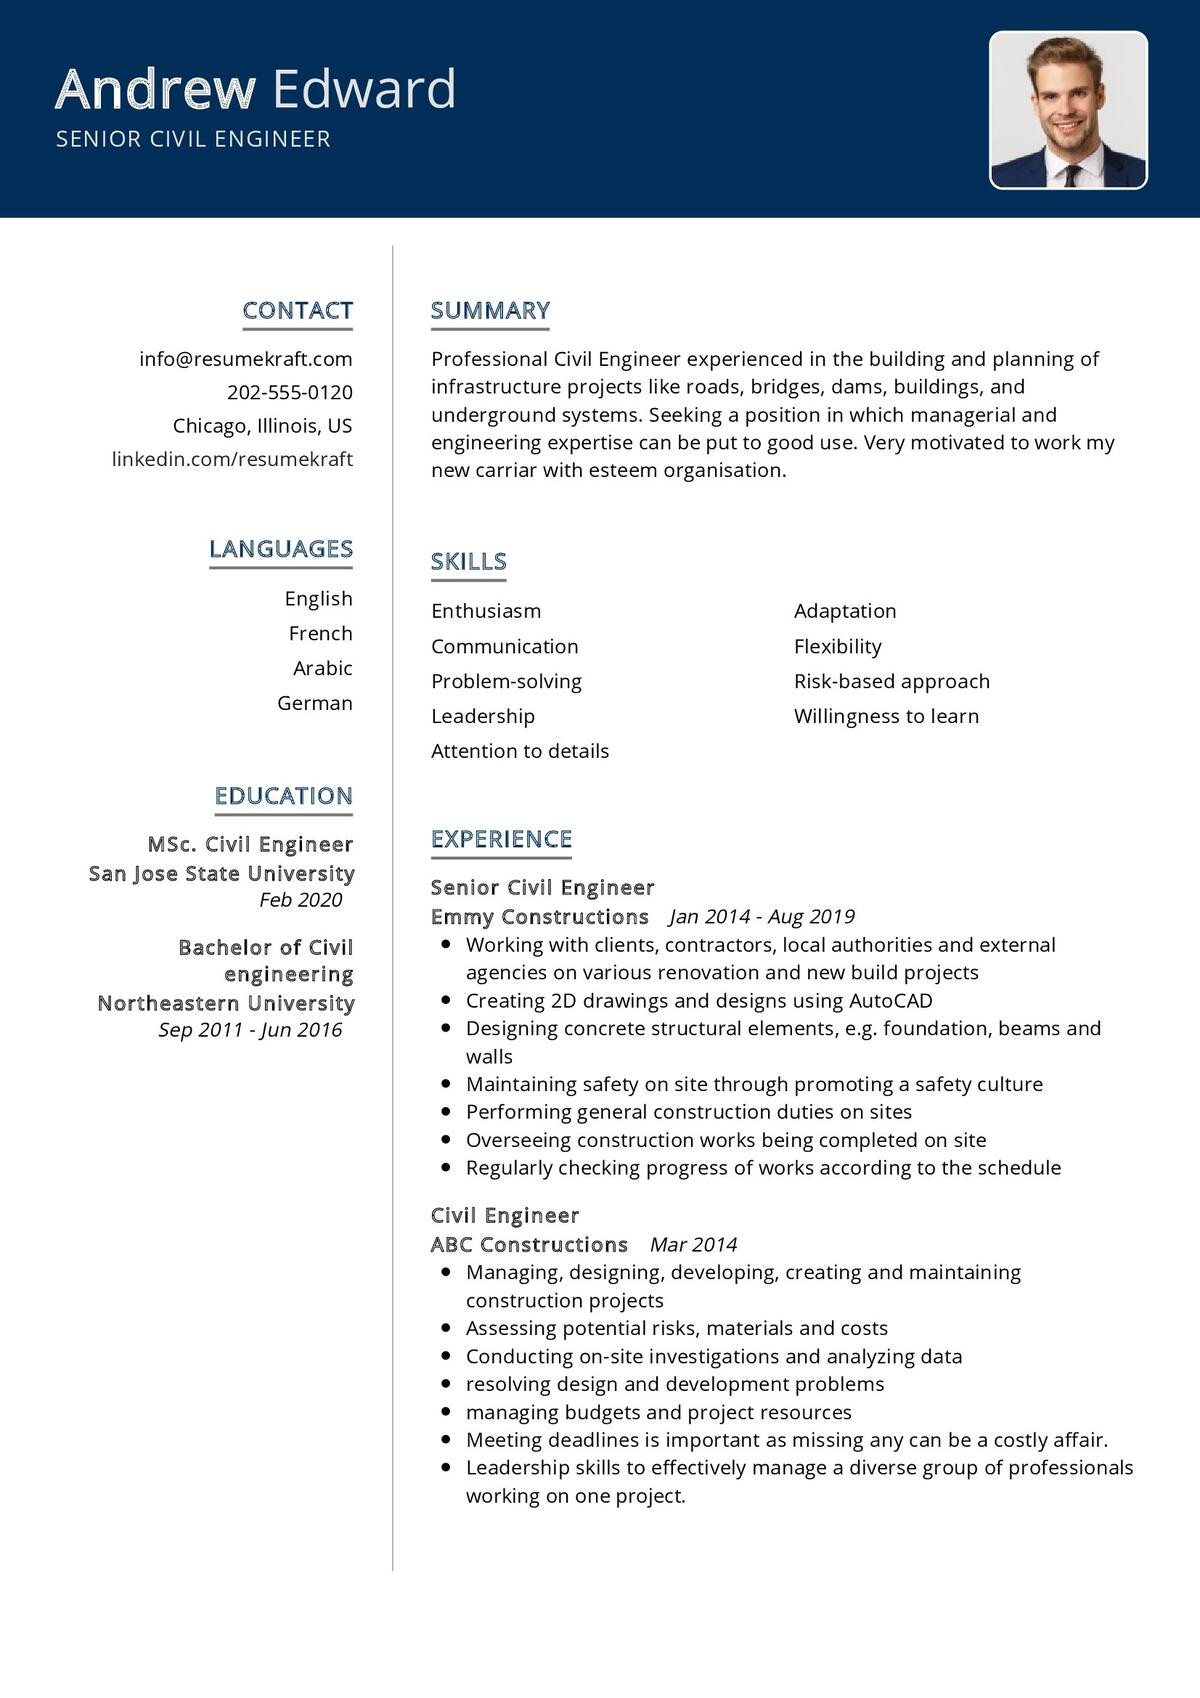 Civil Site Engineer Experience Resume Sample Senior Civil Engineer Resume Sample 2021 Writing Guide – Resumekraft